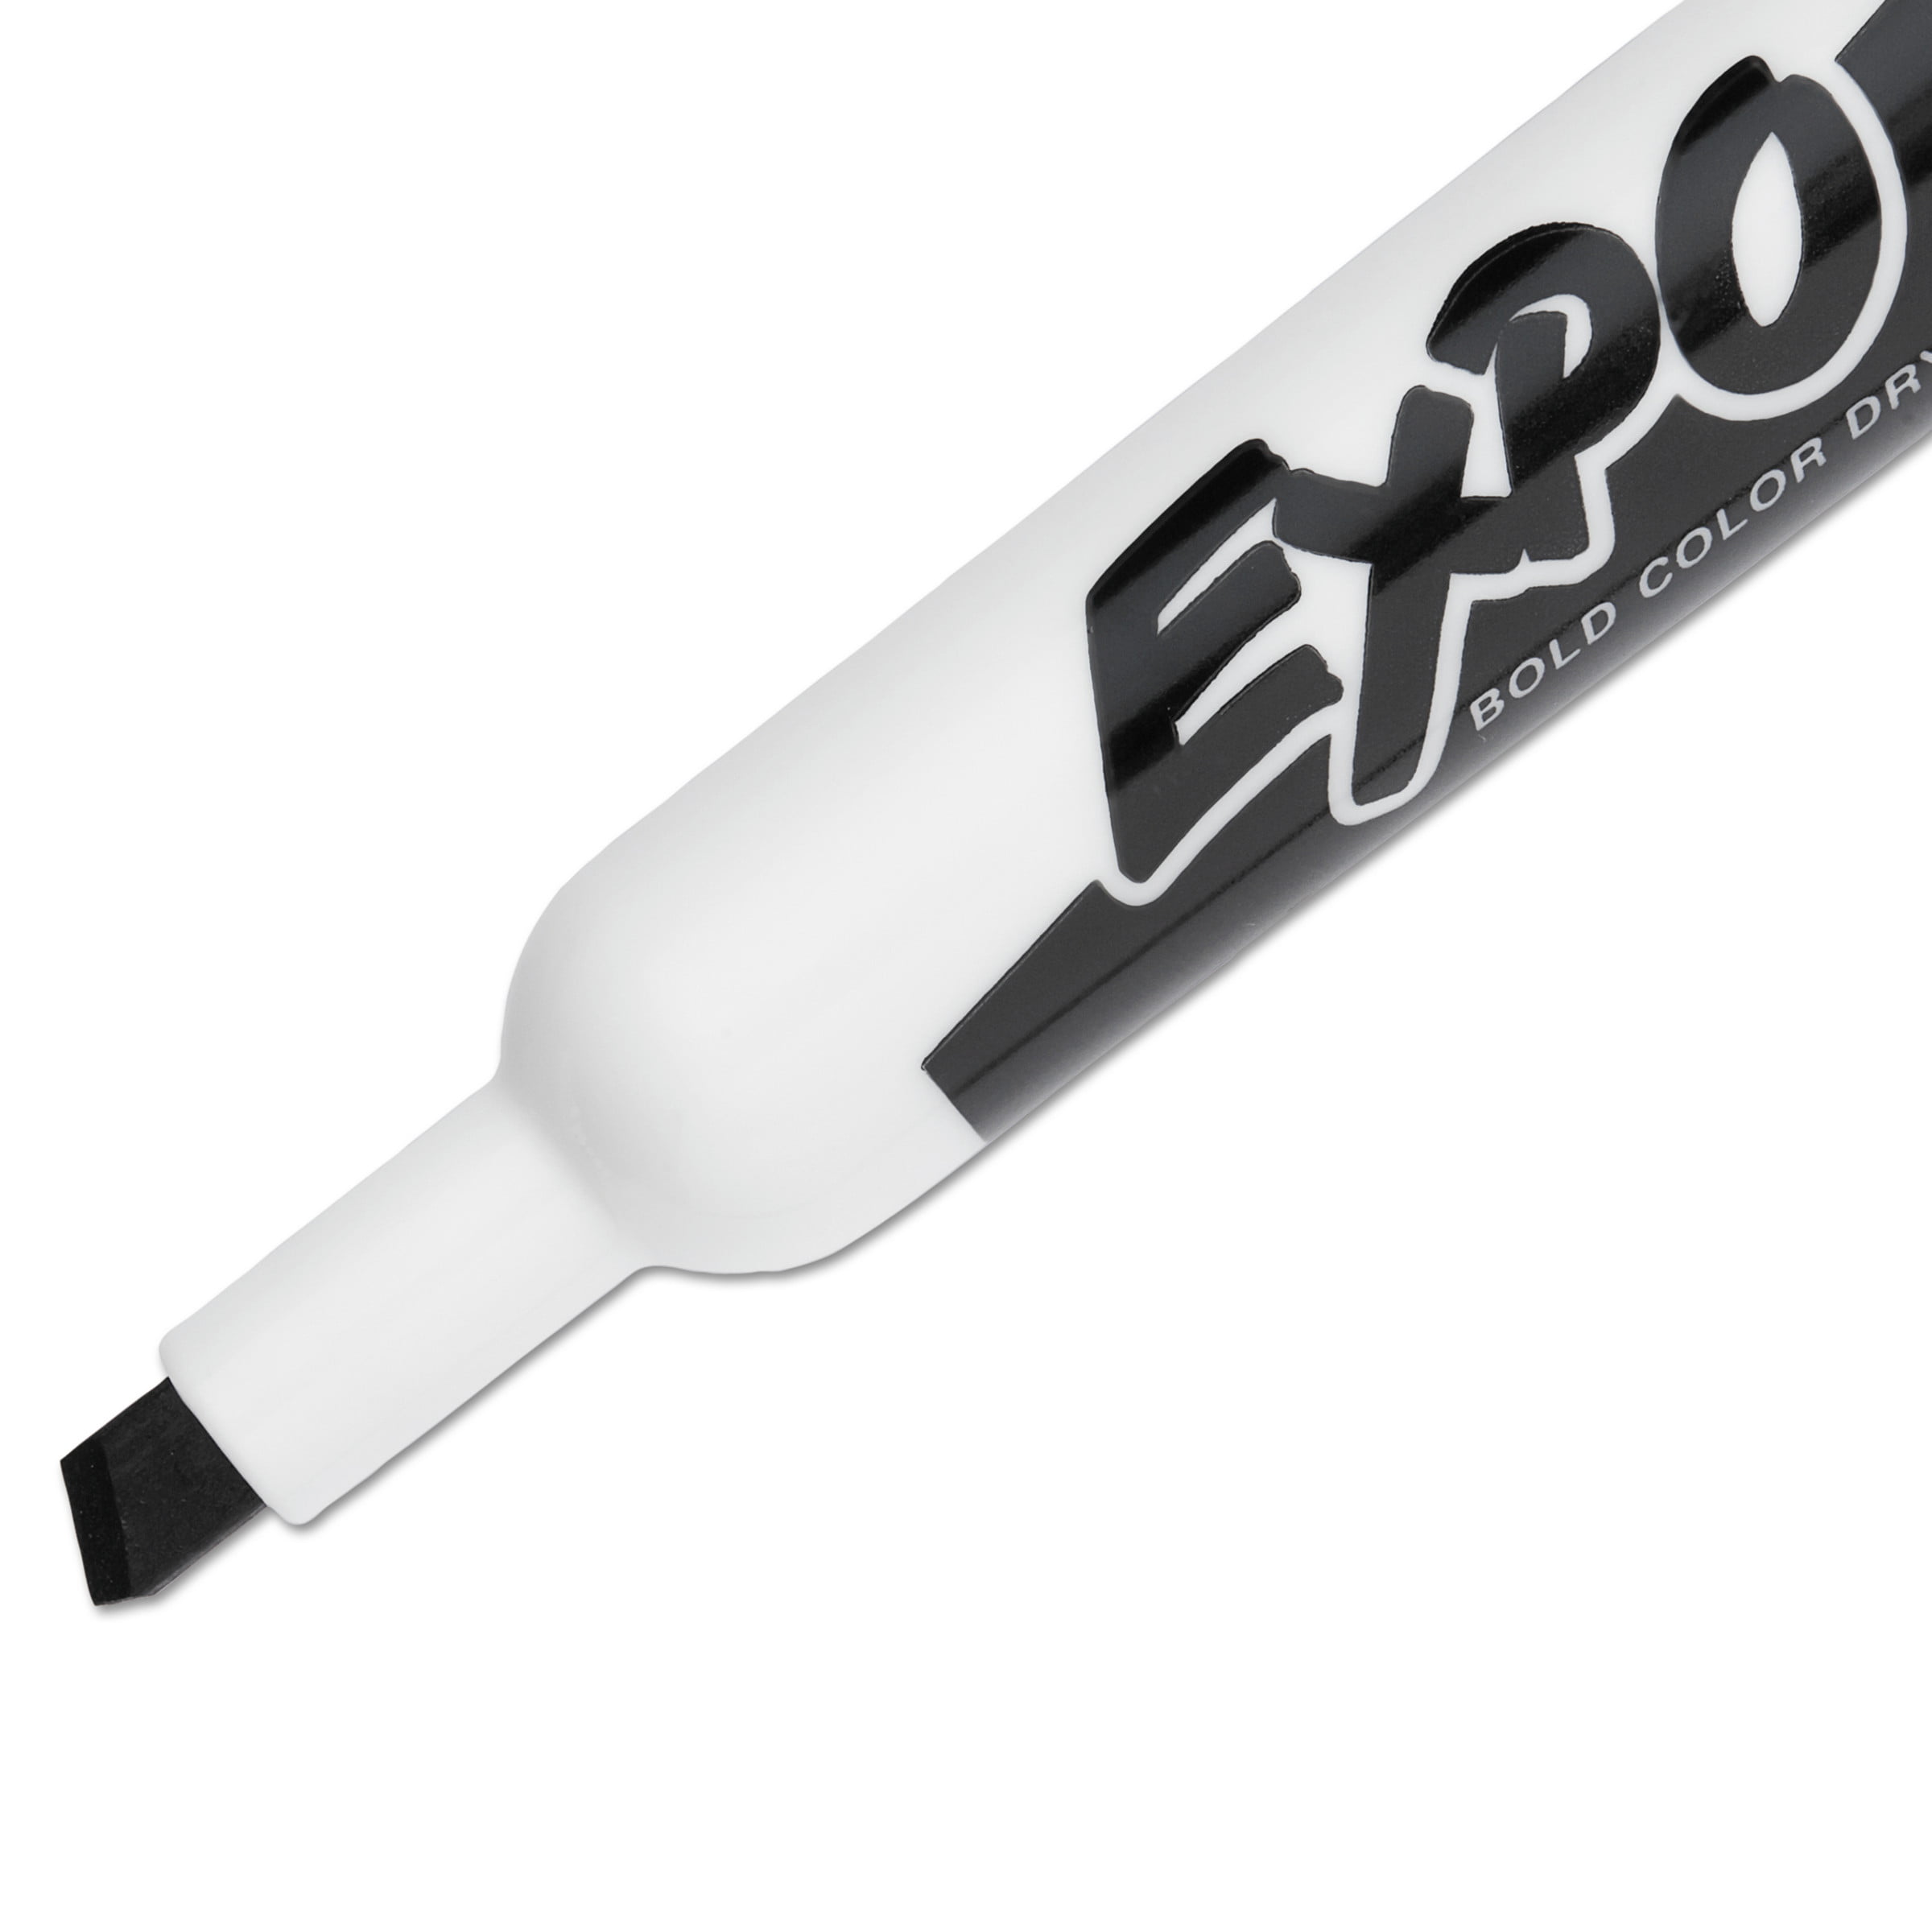 Expo® Chisel Tip Dry Erase Markers - Black, 4 pk - Harris Teeter